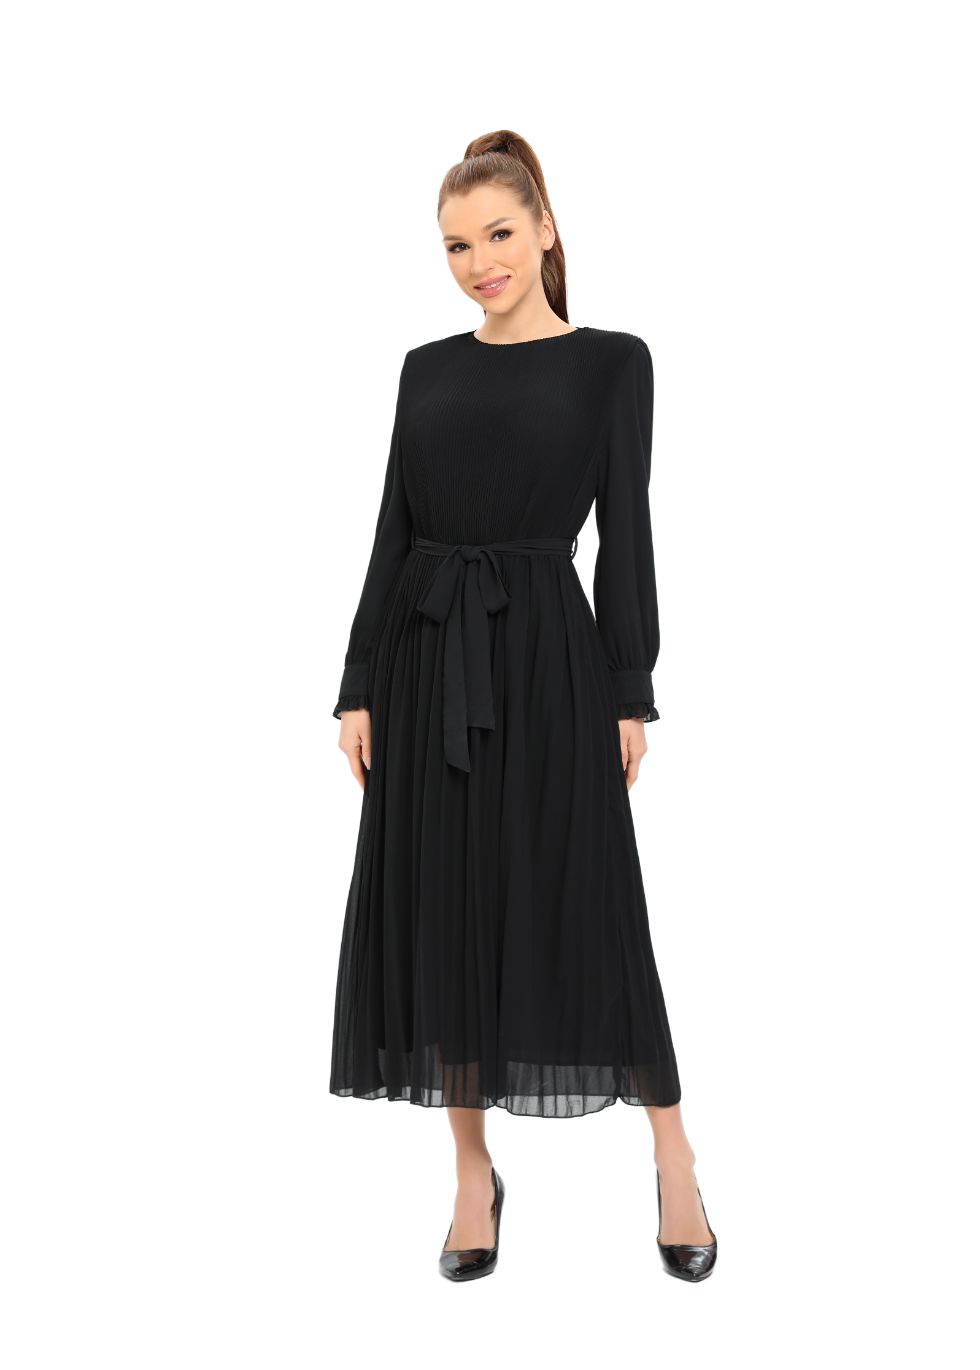 Elegant Black Micro Pleat Dress with Cuffs - seilerlanguageservices